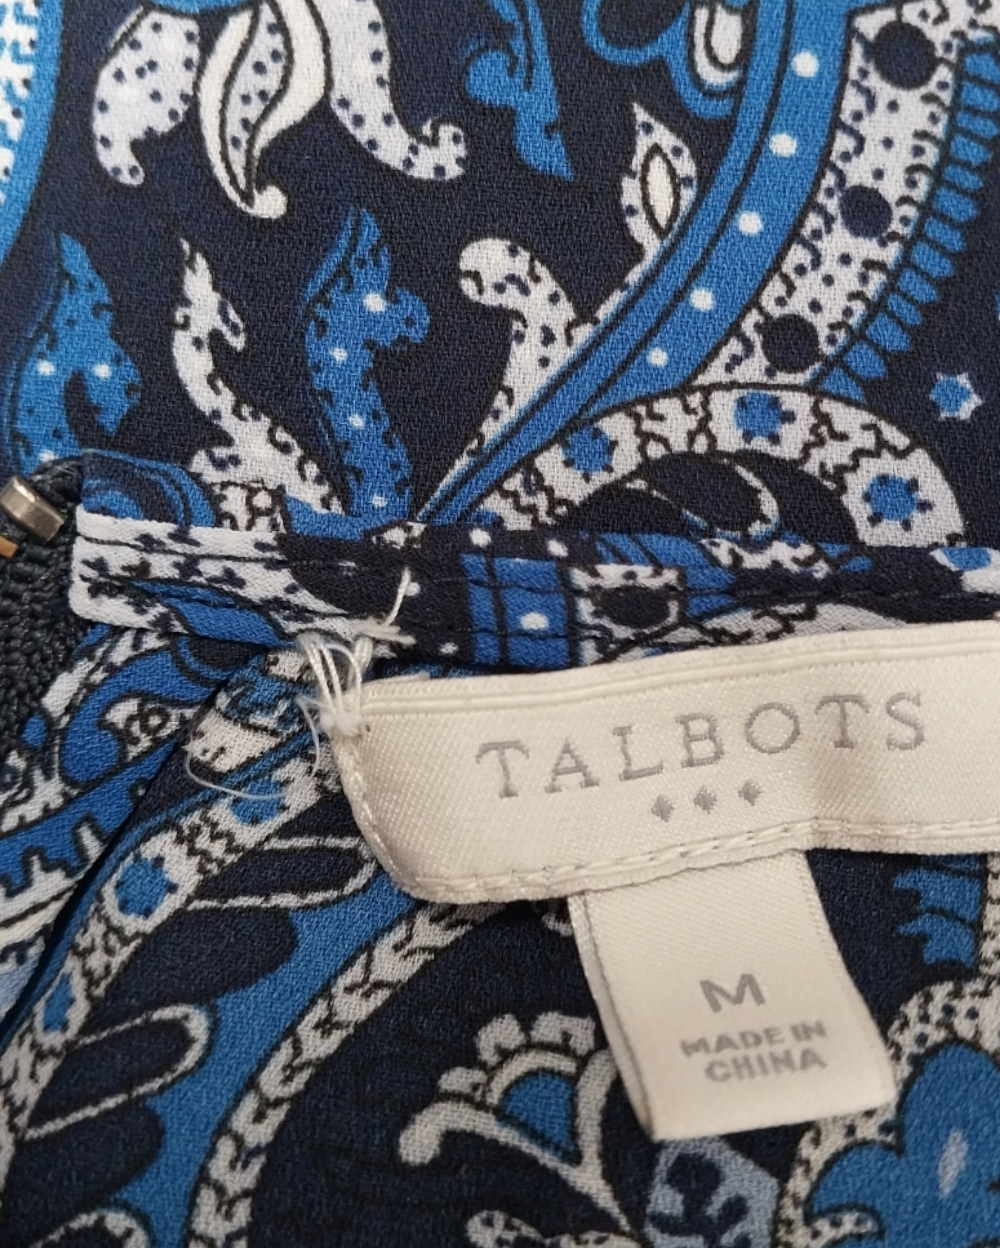 Blusas Casuales Talbots